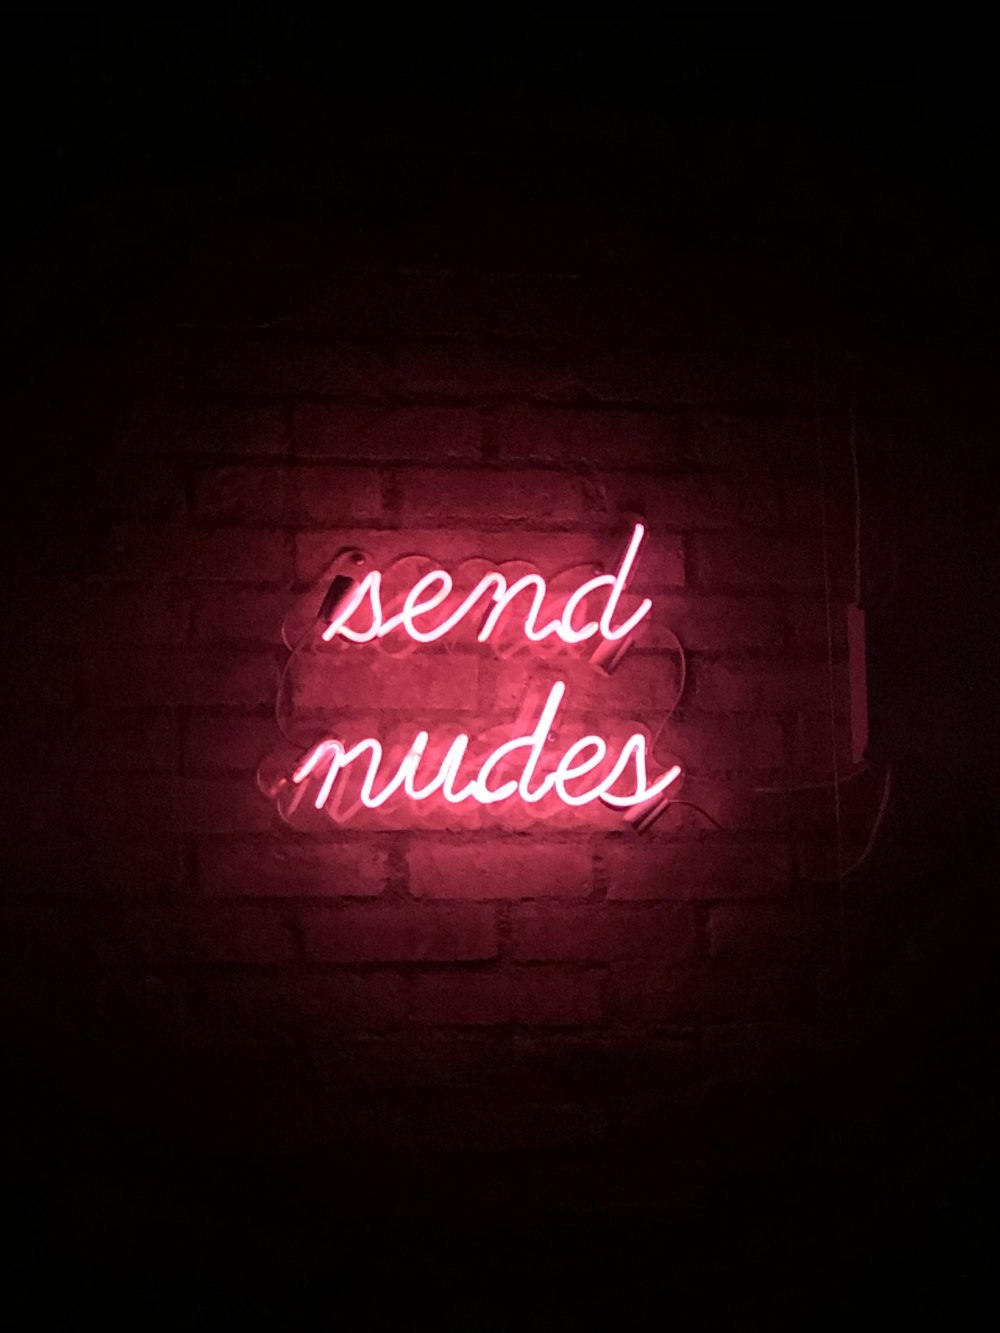 send nudes neon signage